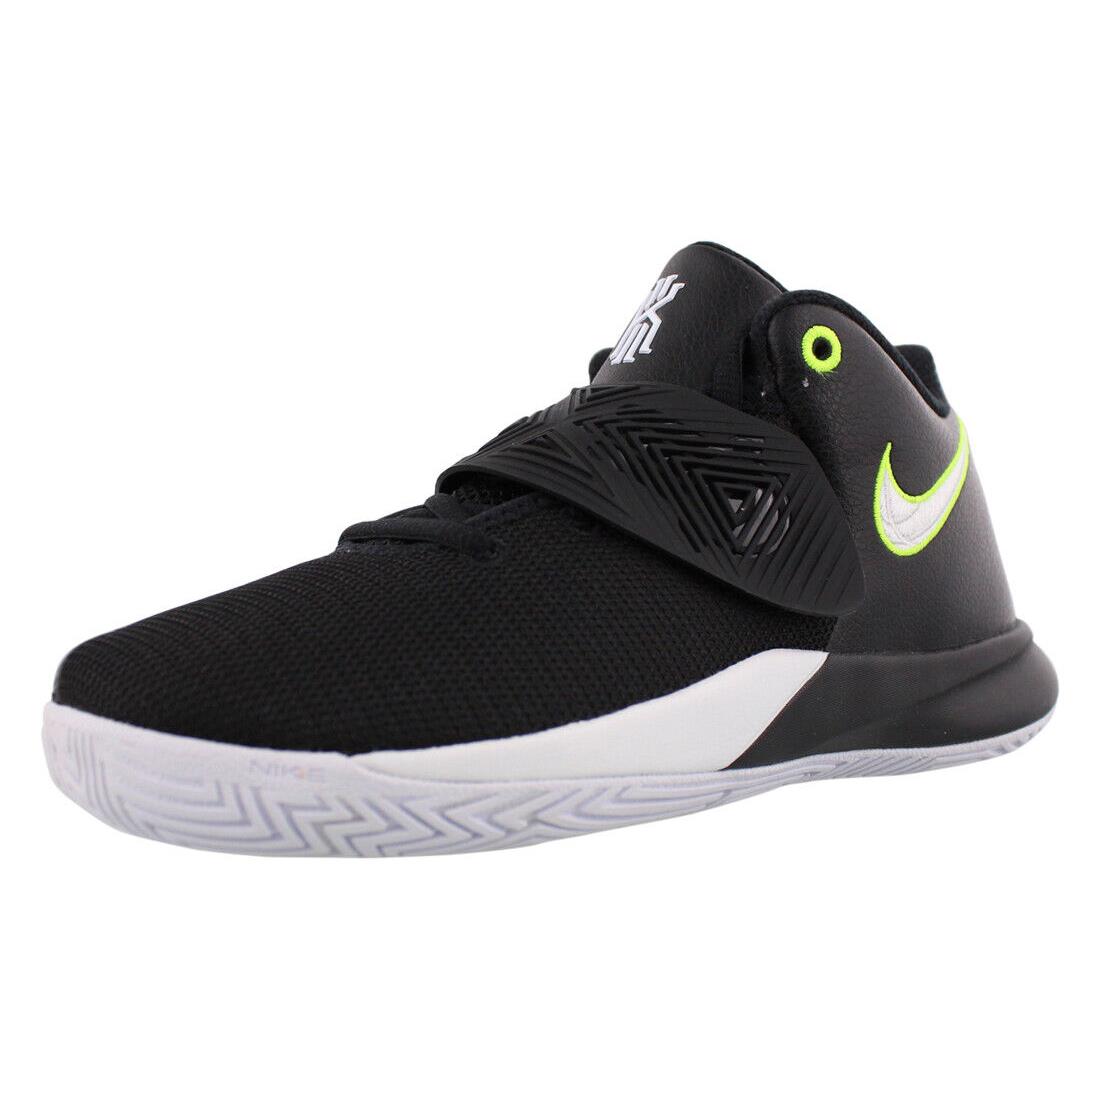 Nike Kyrie Flytrap Iii PS Boys Shoes Size 10.5 Color: Black/white Volt